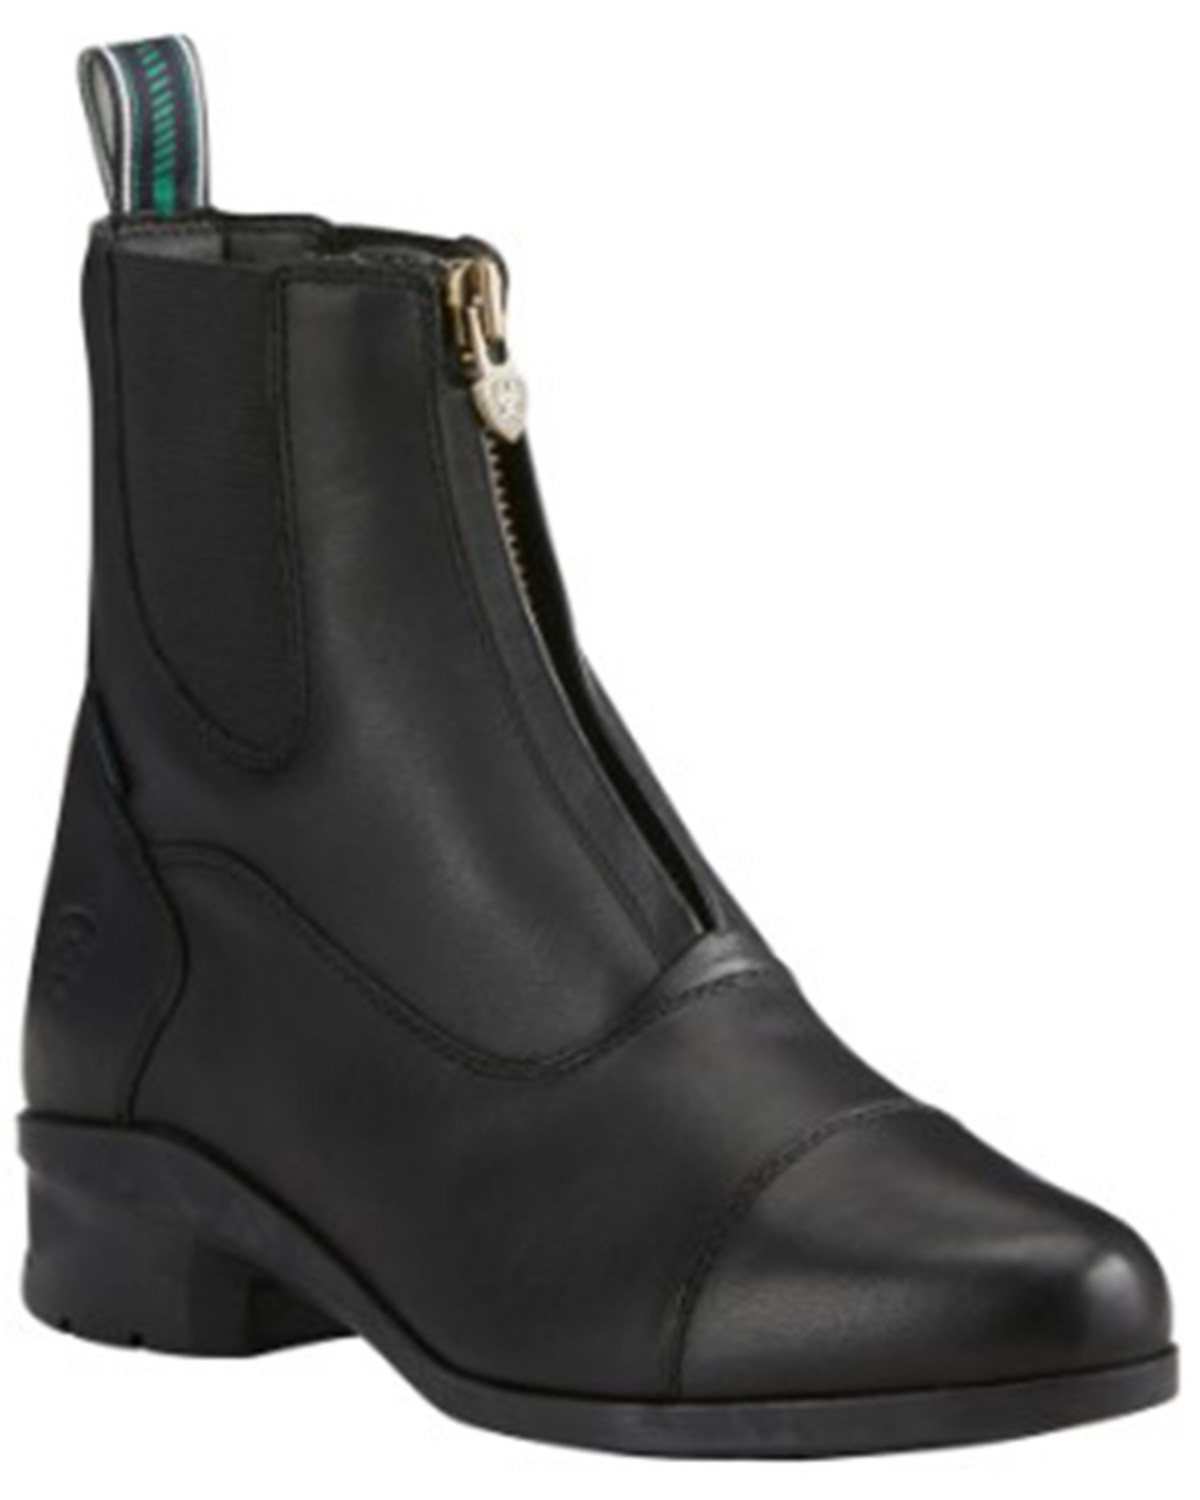 Ariat Women's Heritage IV Waterproof Paddock Boots - Medium Toe